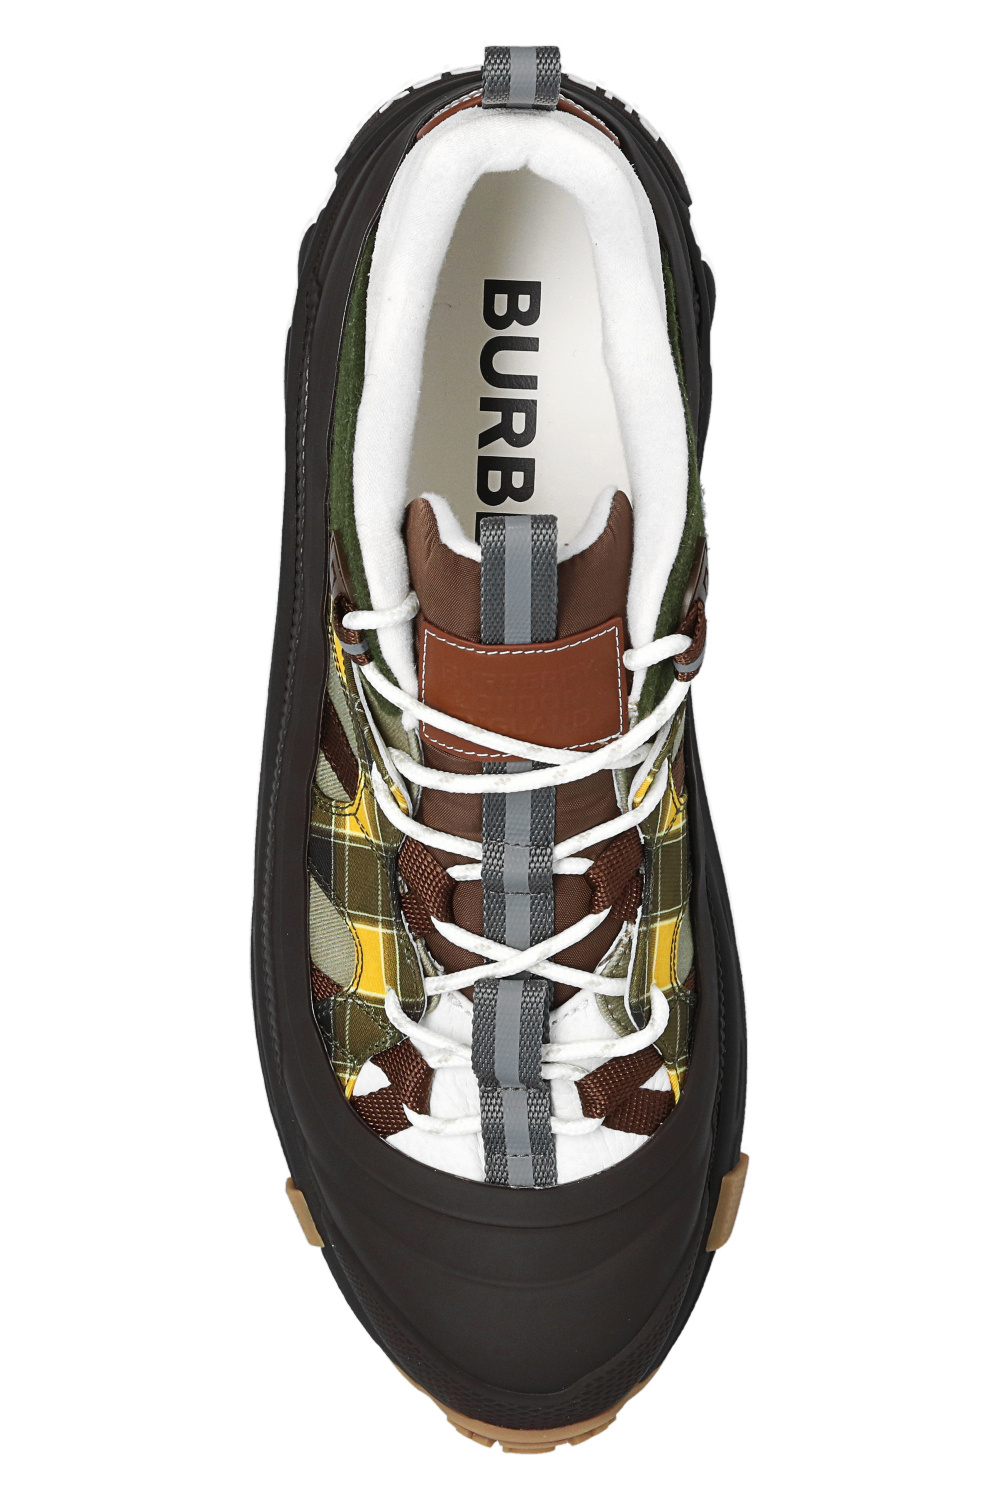 burberry kensington ‘Arthur’ sneakers